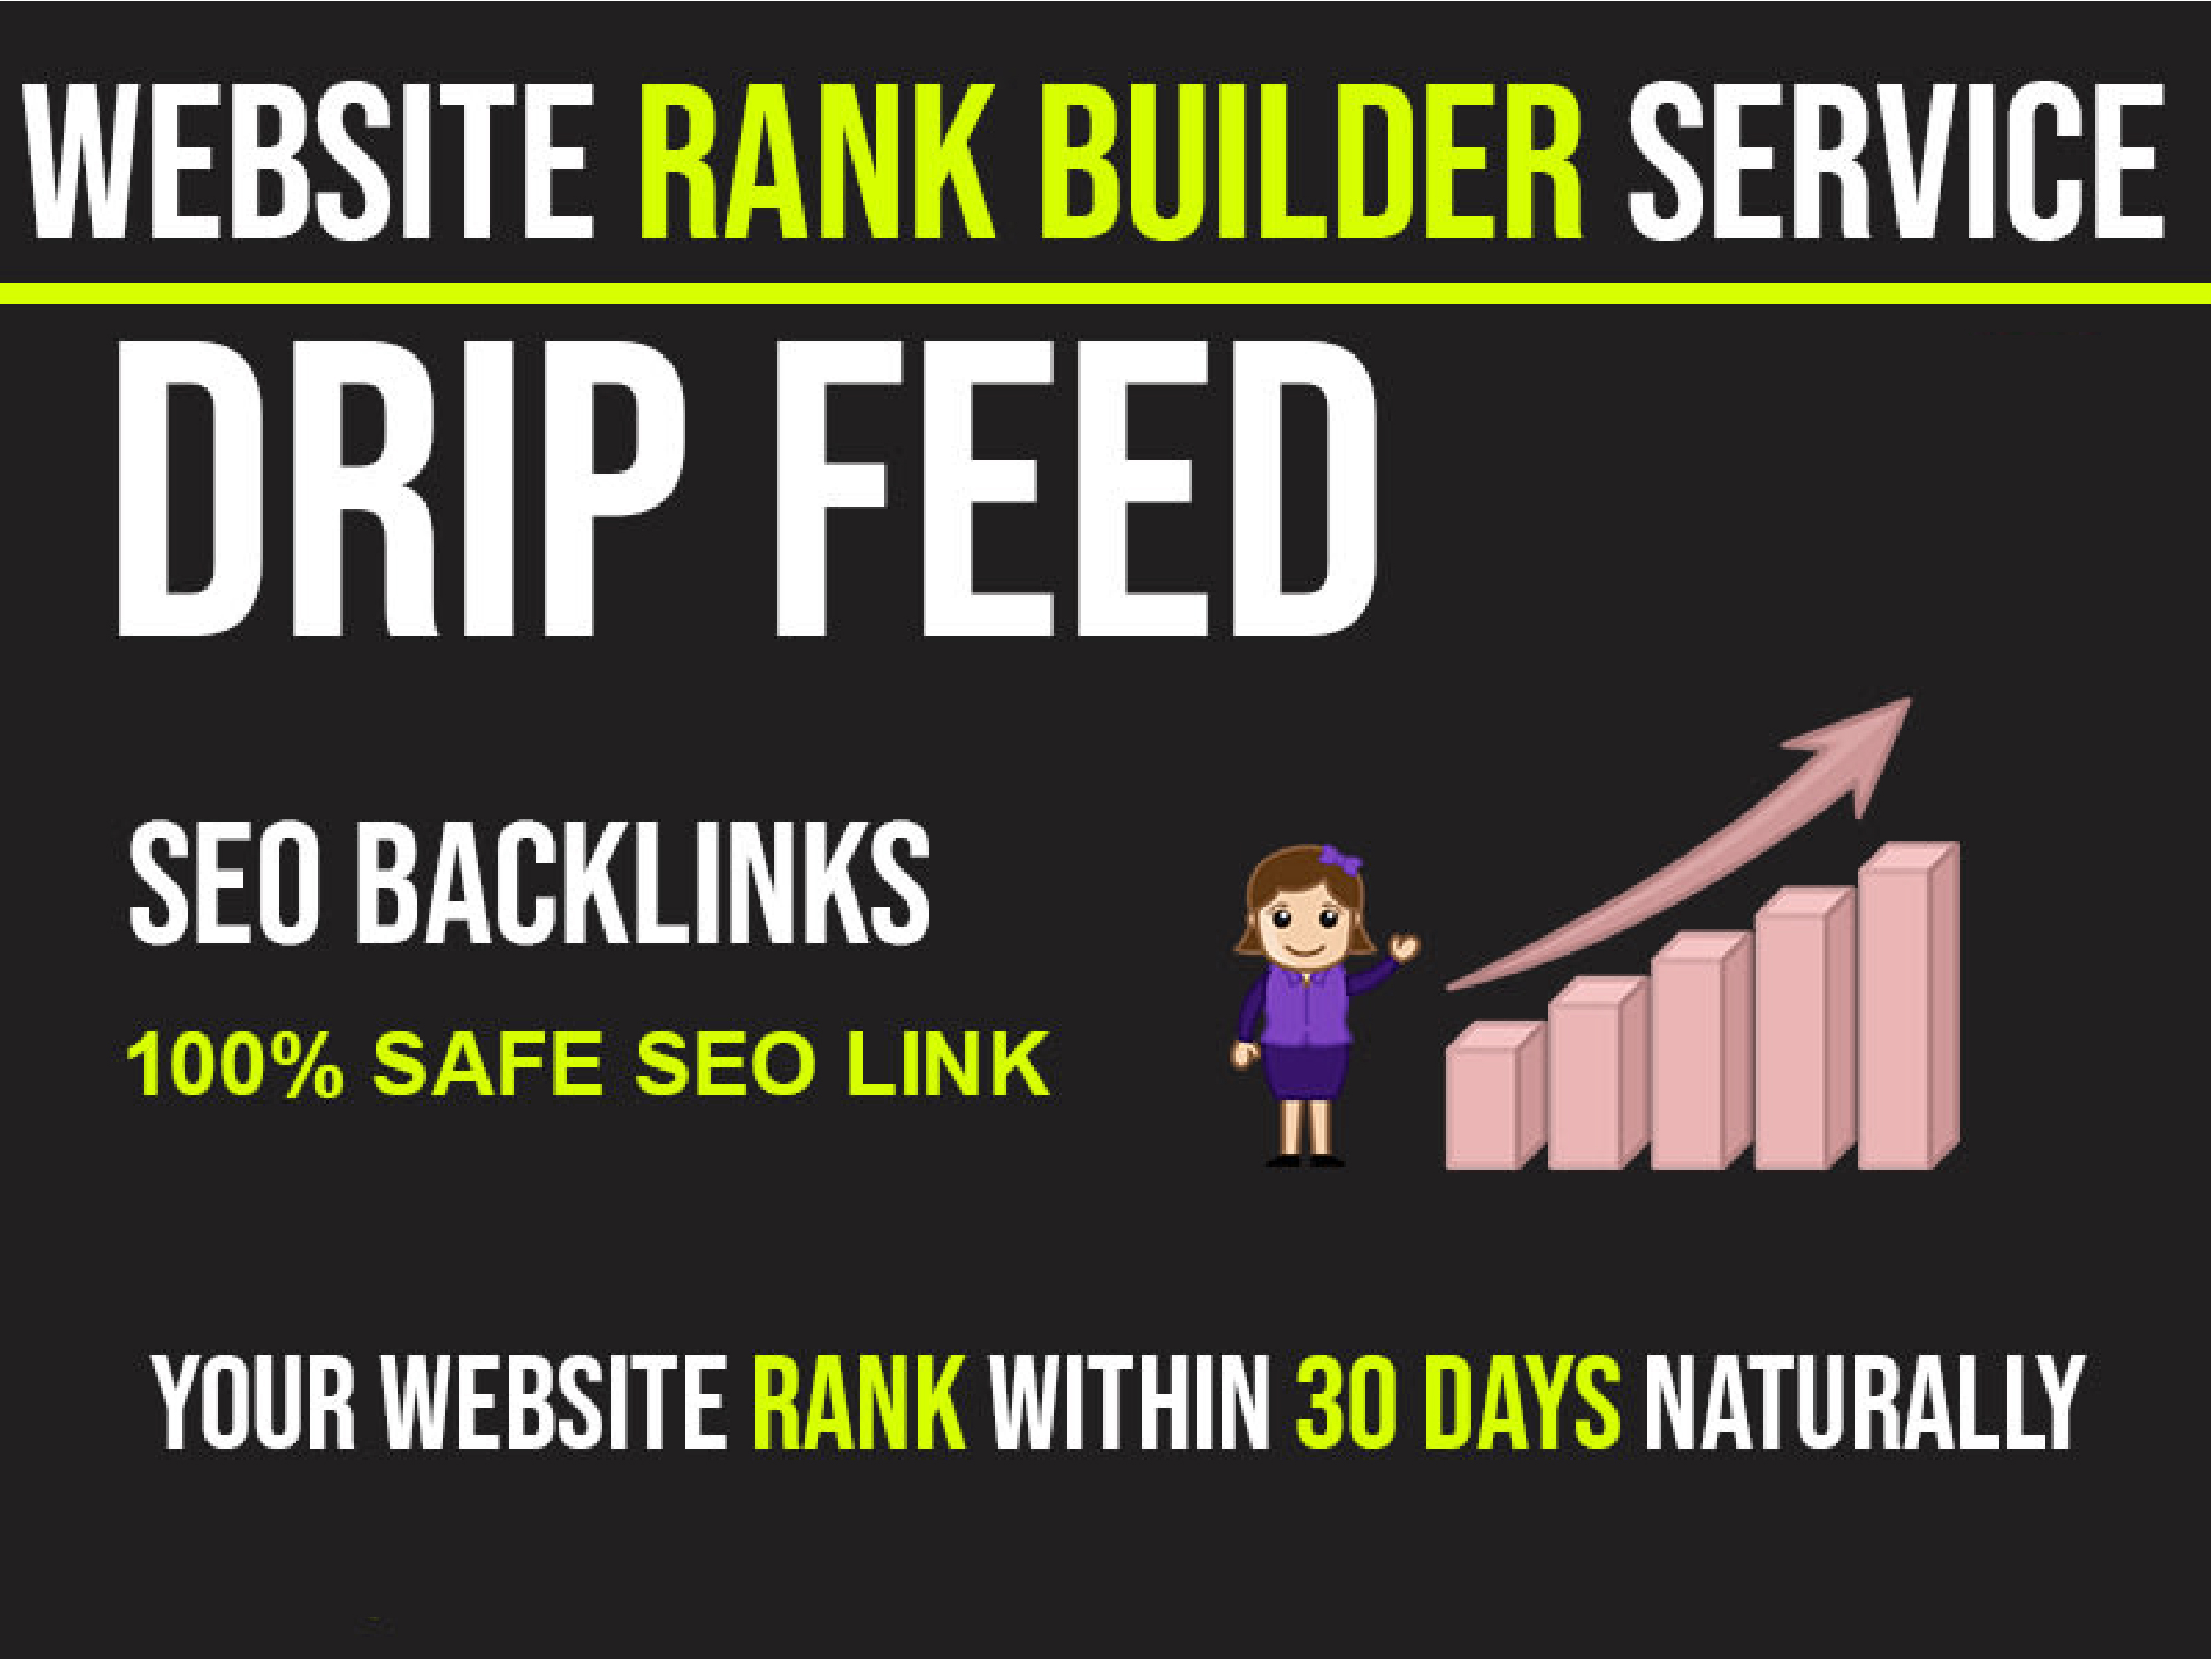 Provide 30 days drip feed daily 2 unique high da backlinks